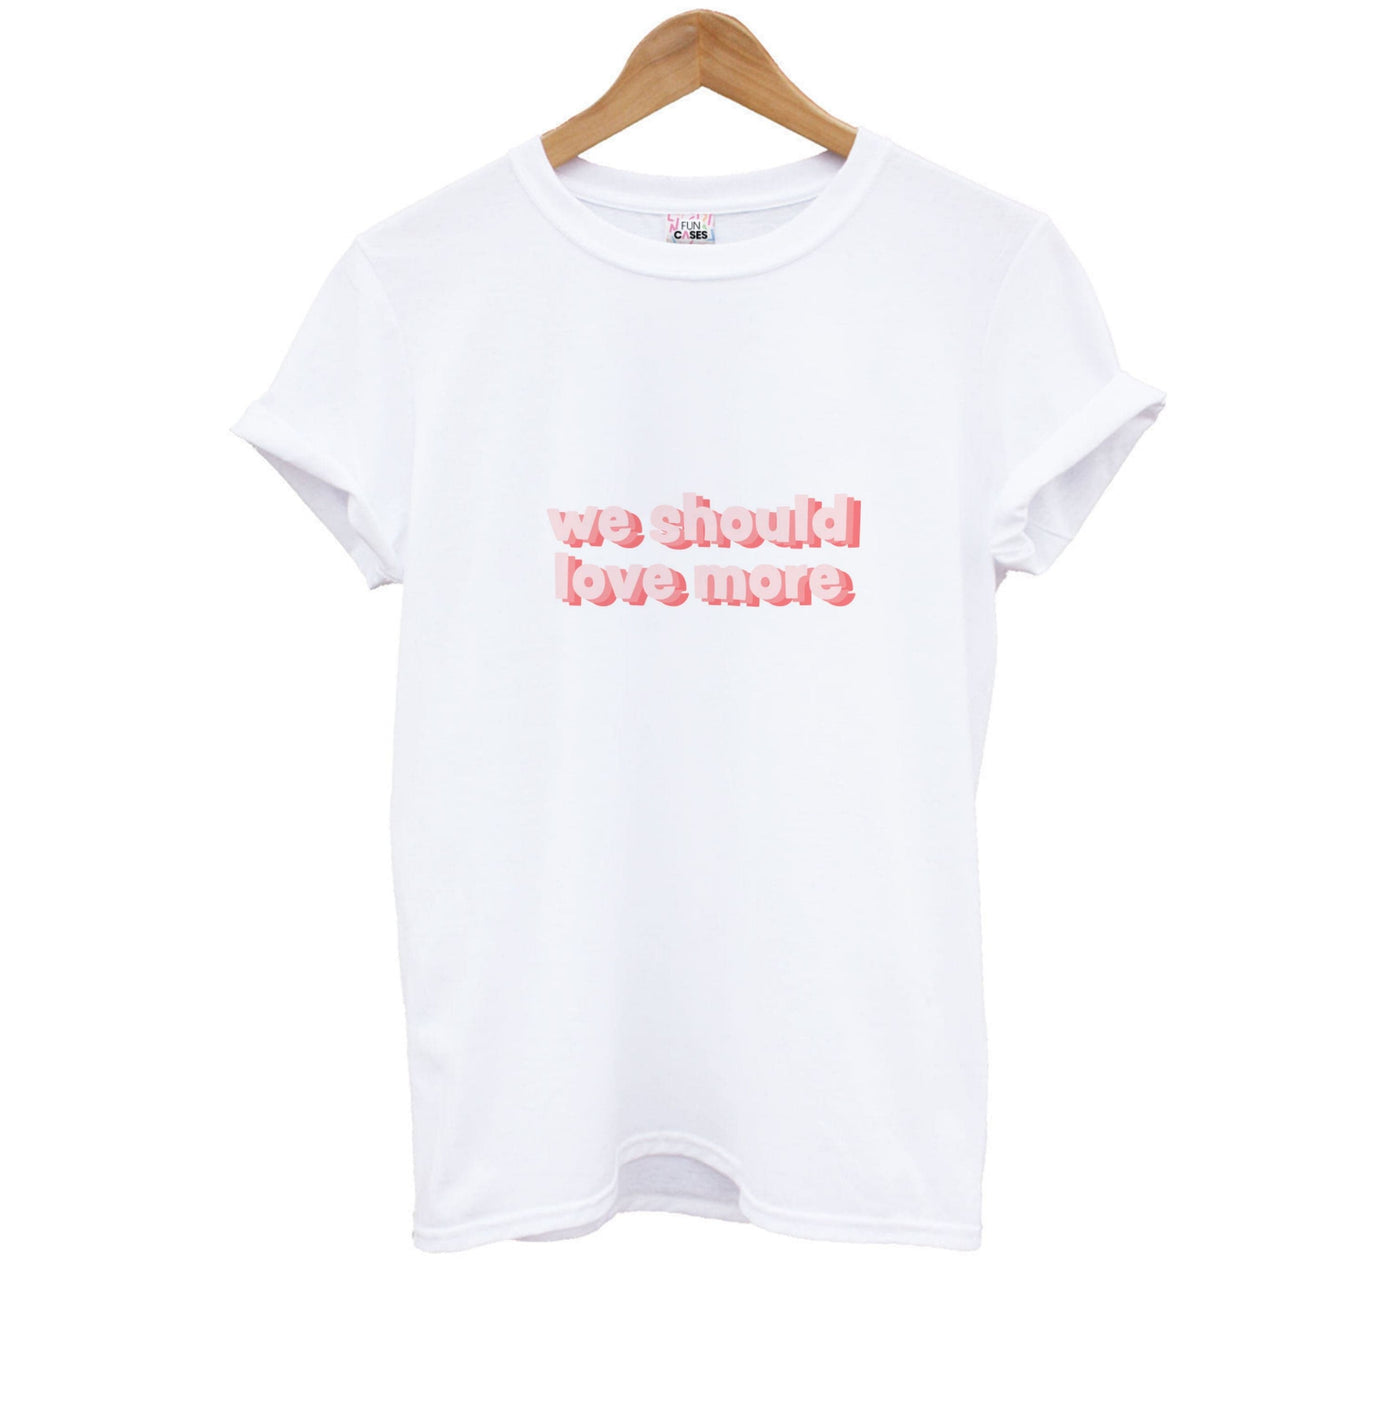 We Should Love More - Loren Gray Kids T-Shirt